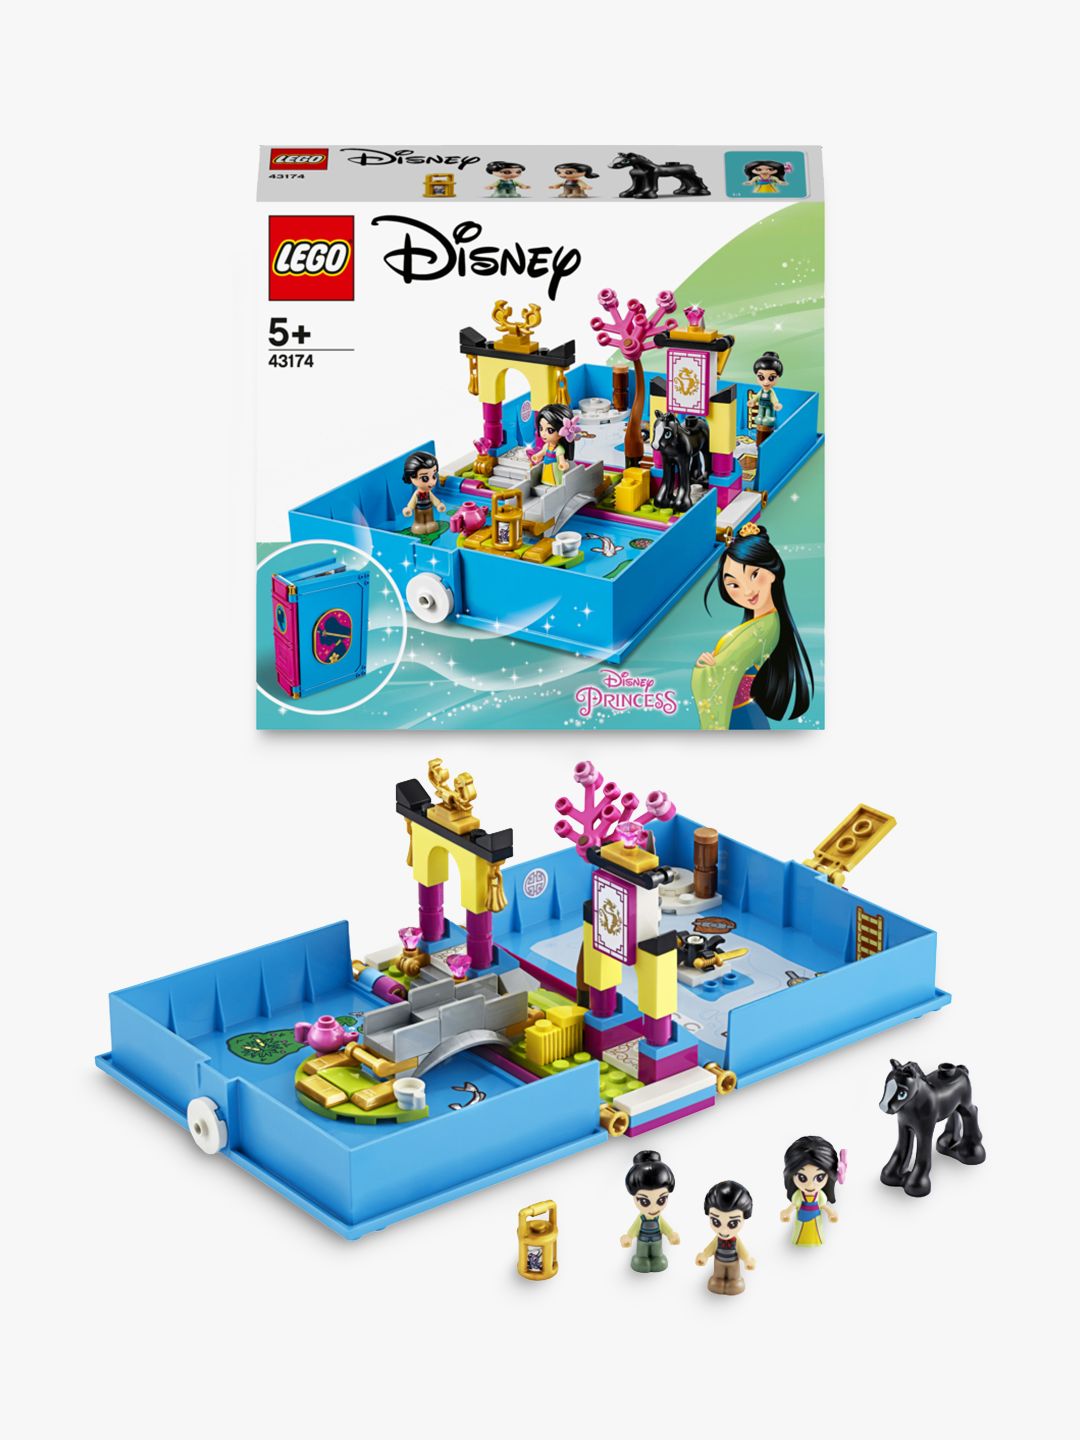 LEGO Disney Princess 43174 mulans fiaba libro Storybook ADVENTUR n1/20 